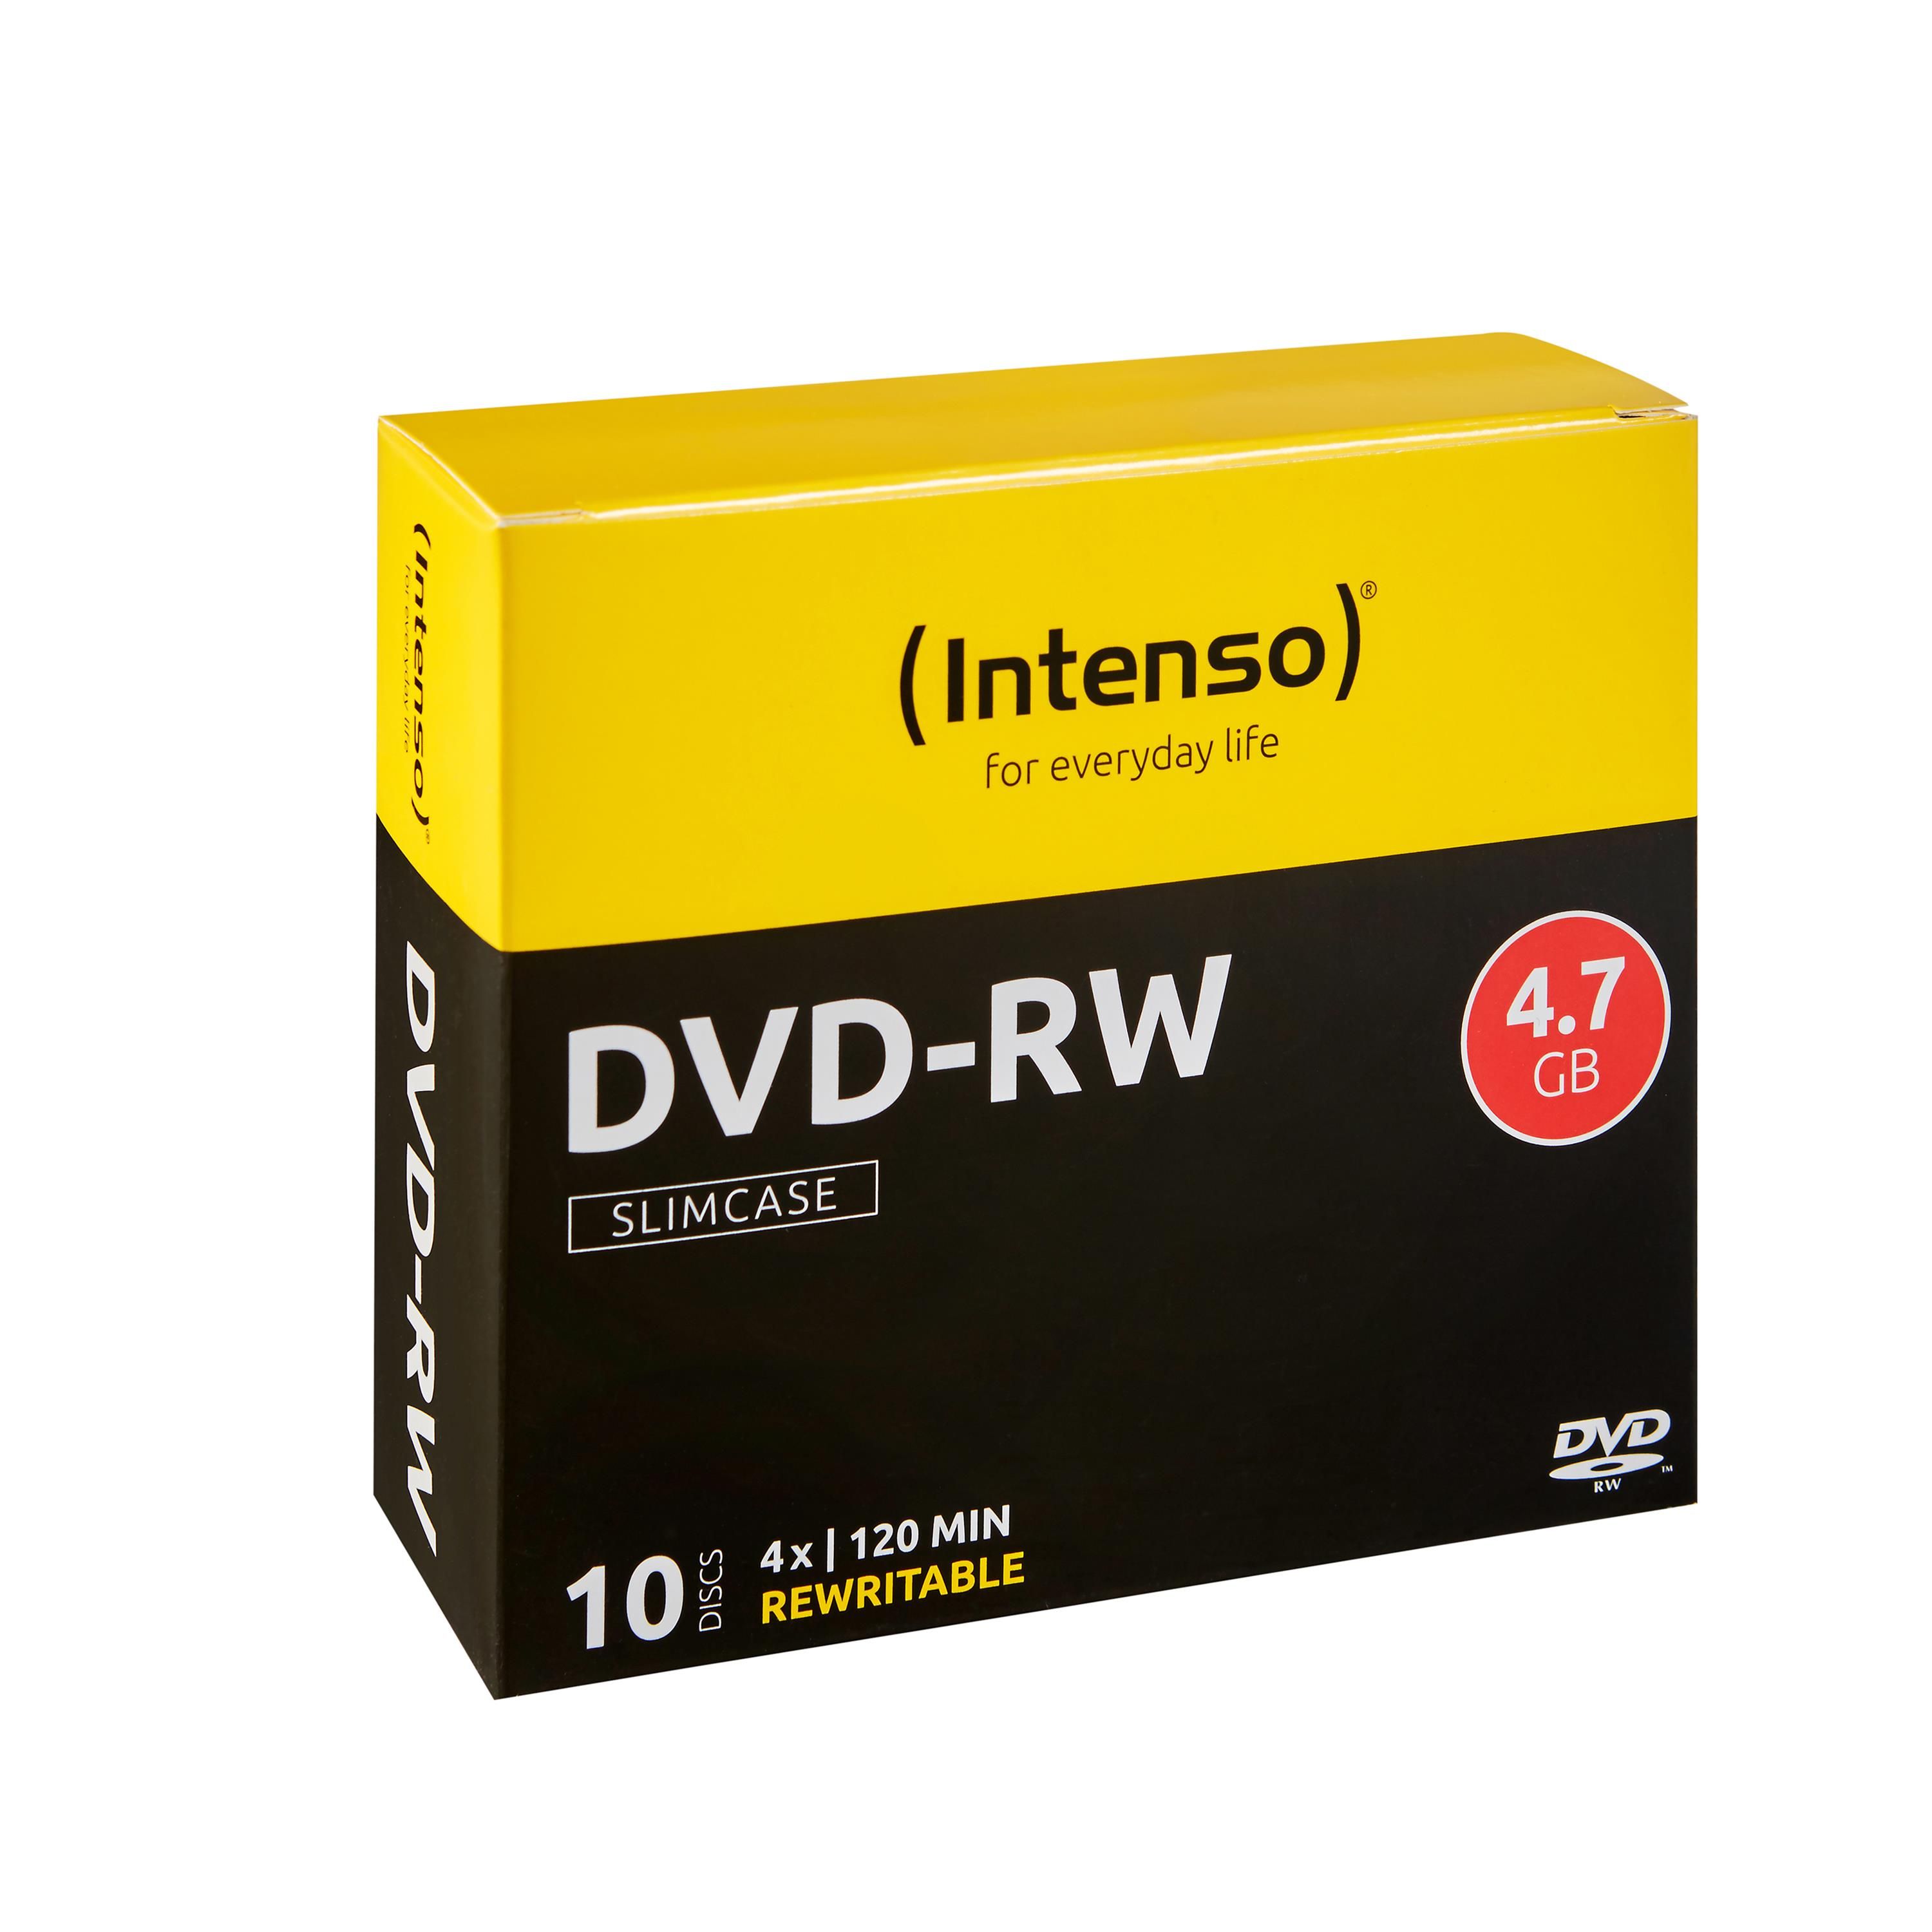 Intenso Dvd-rw 4,7gb 10pcs